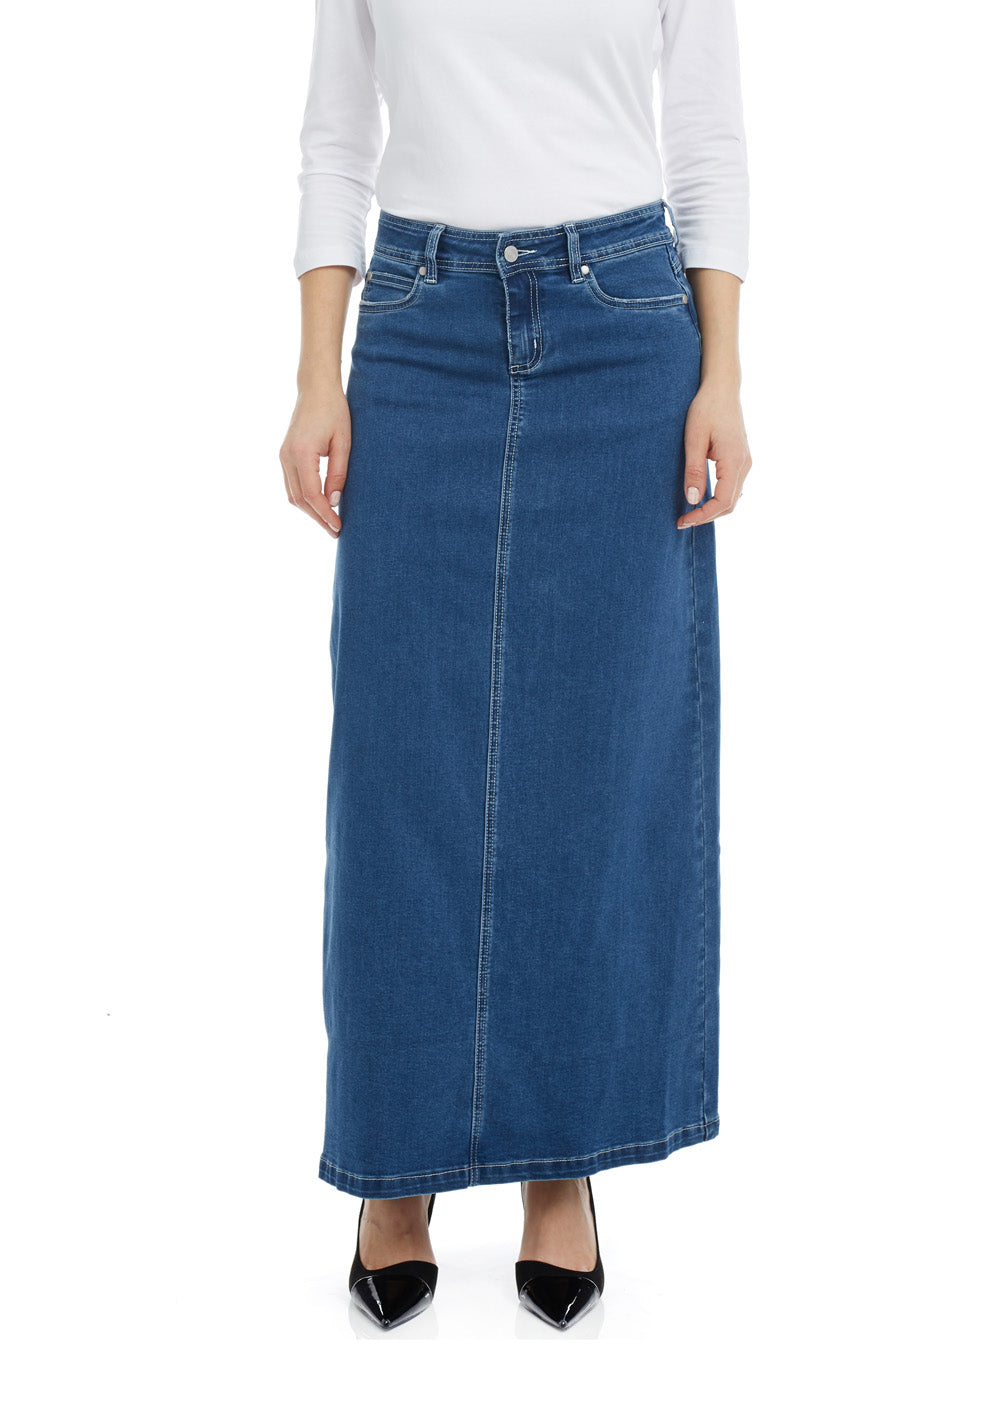 Esteez GEORGIA Denim Skirt - Ankle Long Maxi A-Line Jean Skirt for WOMEN - CLASSIC BLUE